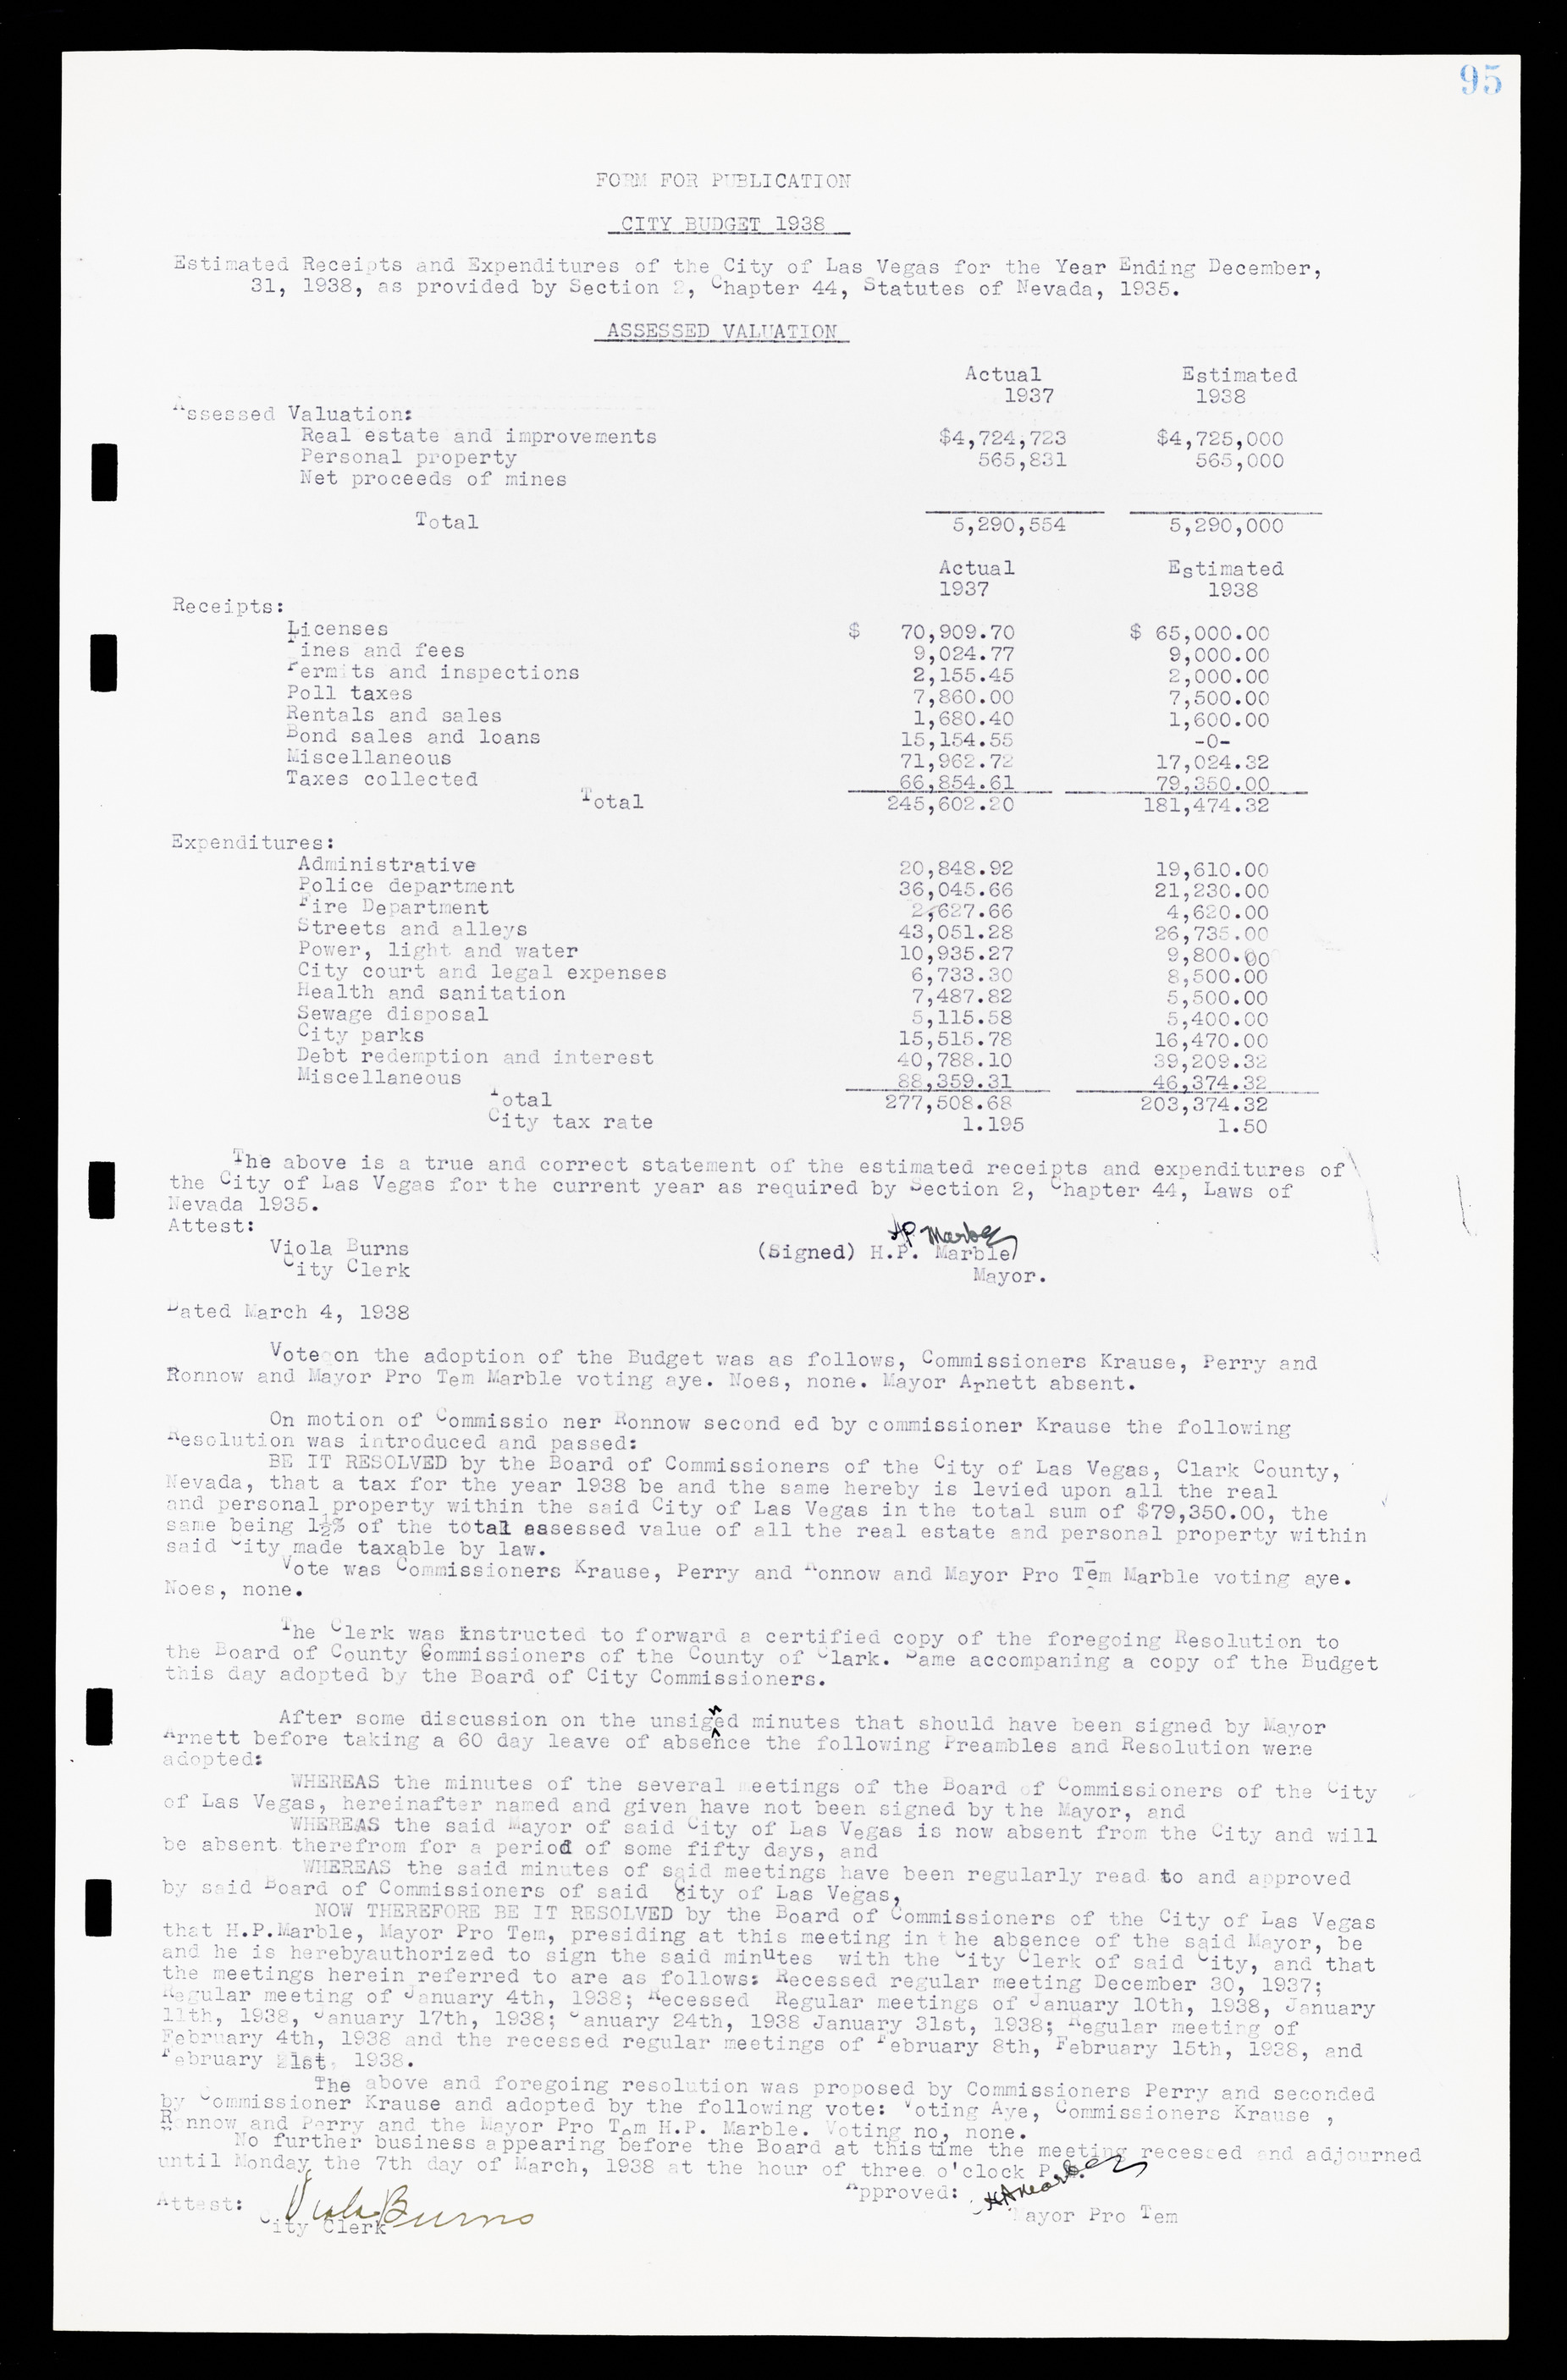 Las Vegas City Commission Minutes, February 17, 1937 to August 4, 1942, lvc000004-106